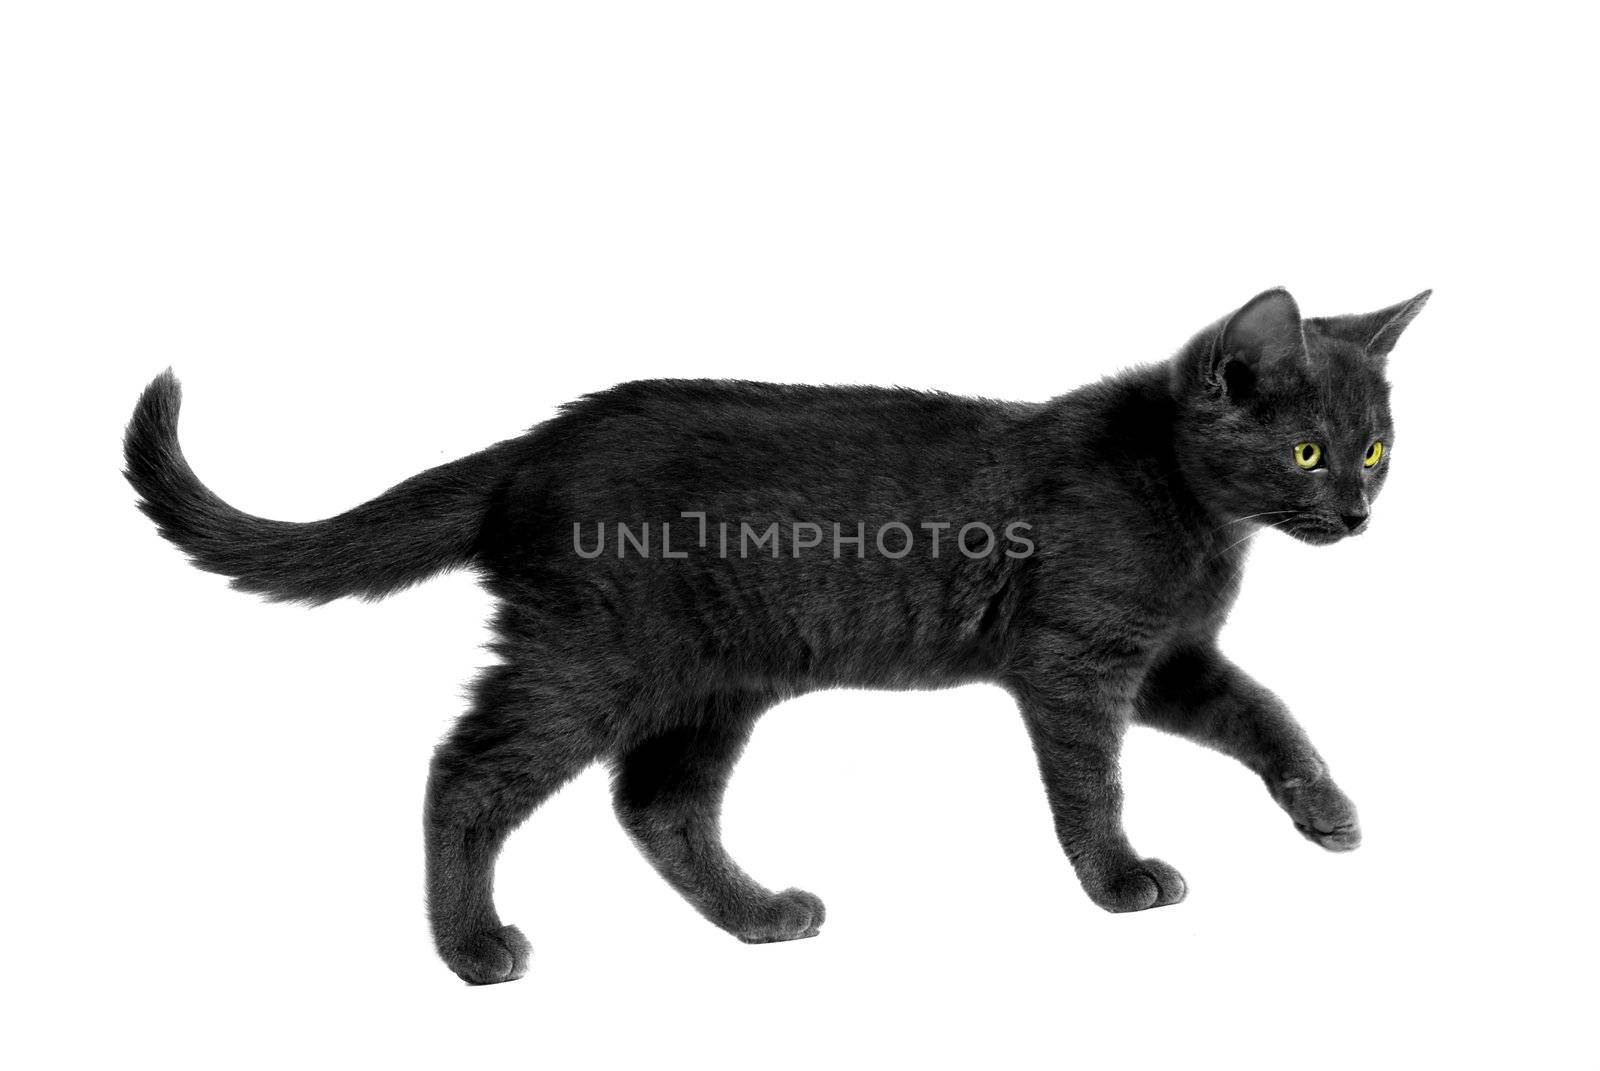 Black cat with yellow eyes walking on white